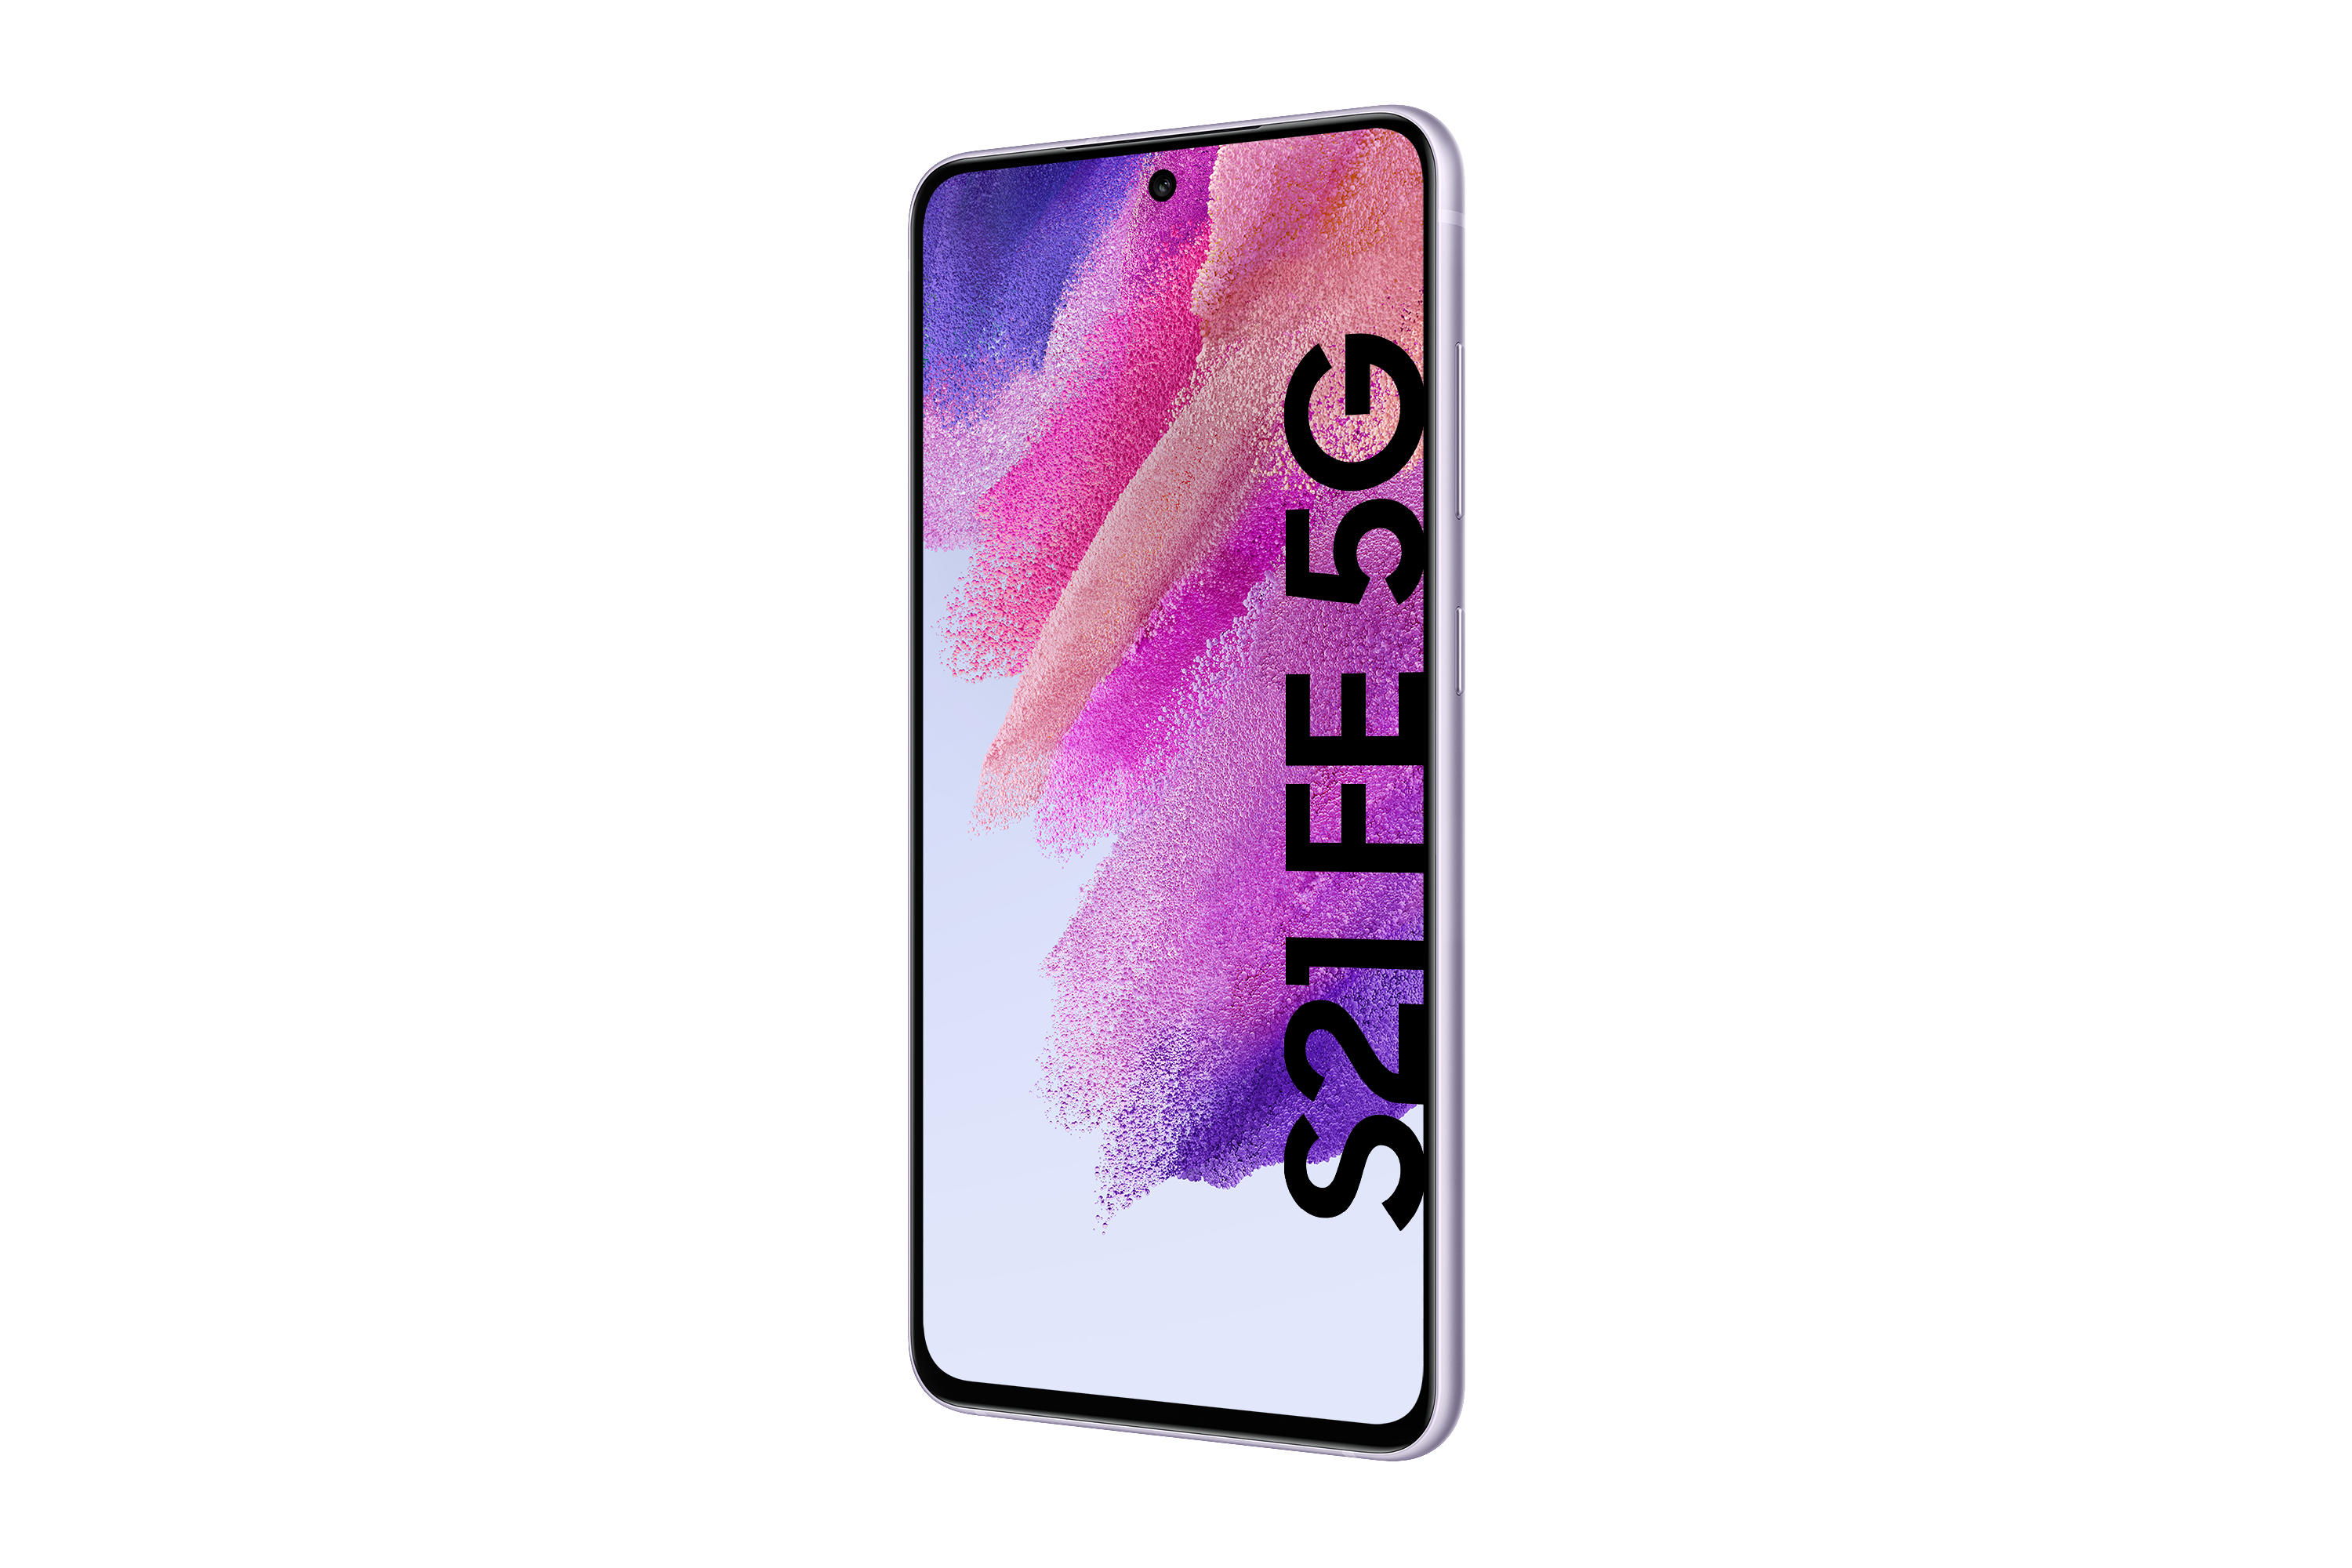 Lavender GB 5G SIM S21 FE 256 Dual Galaxy SAMSUNG